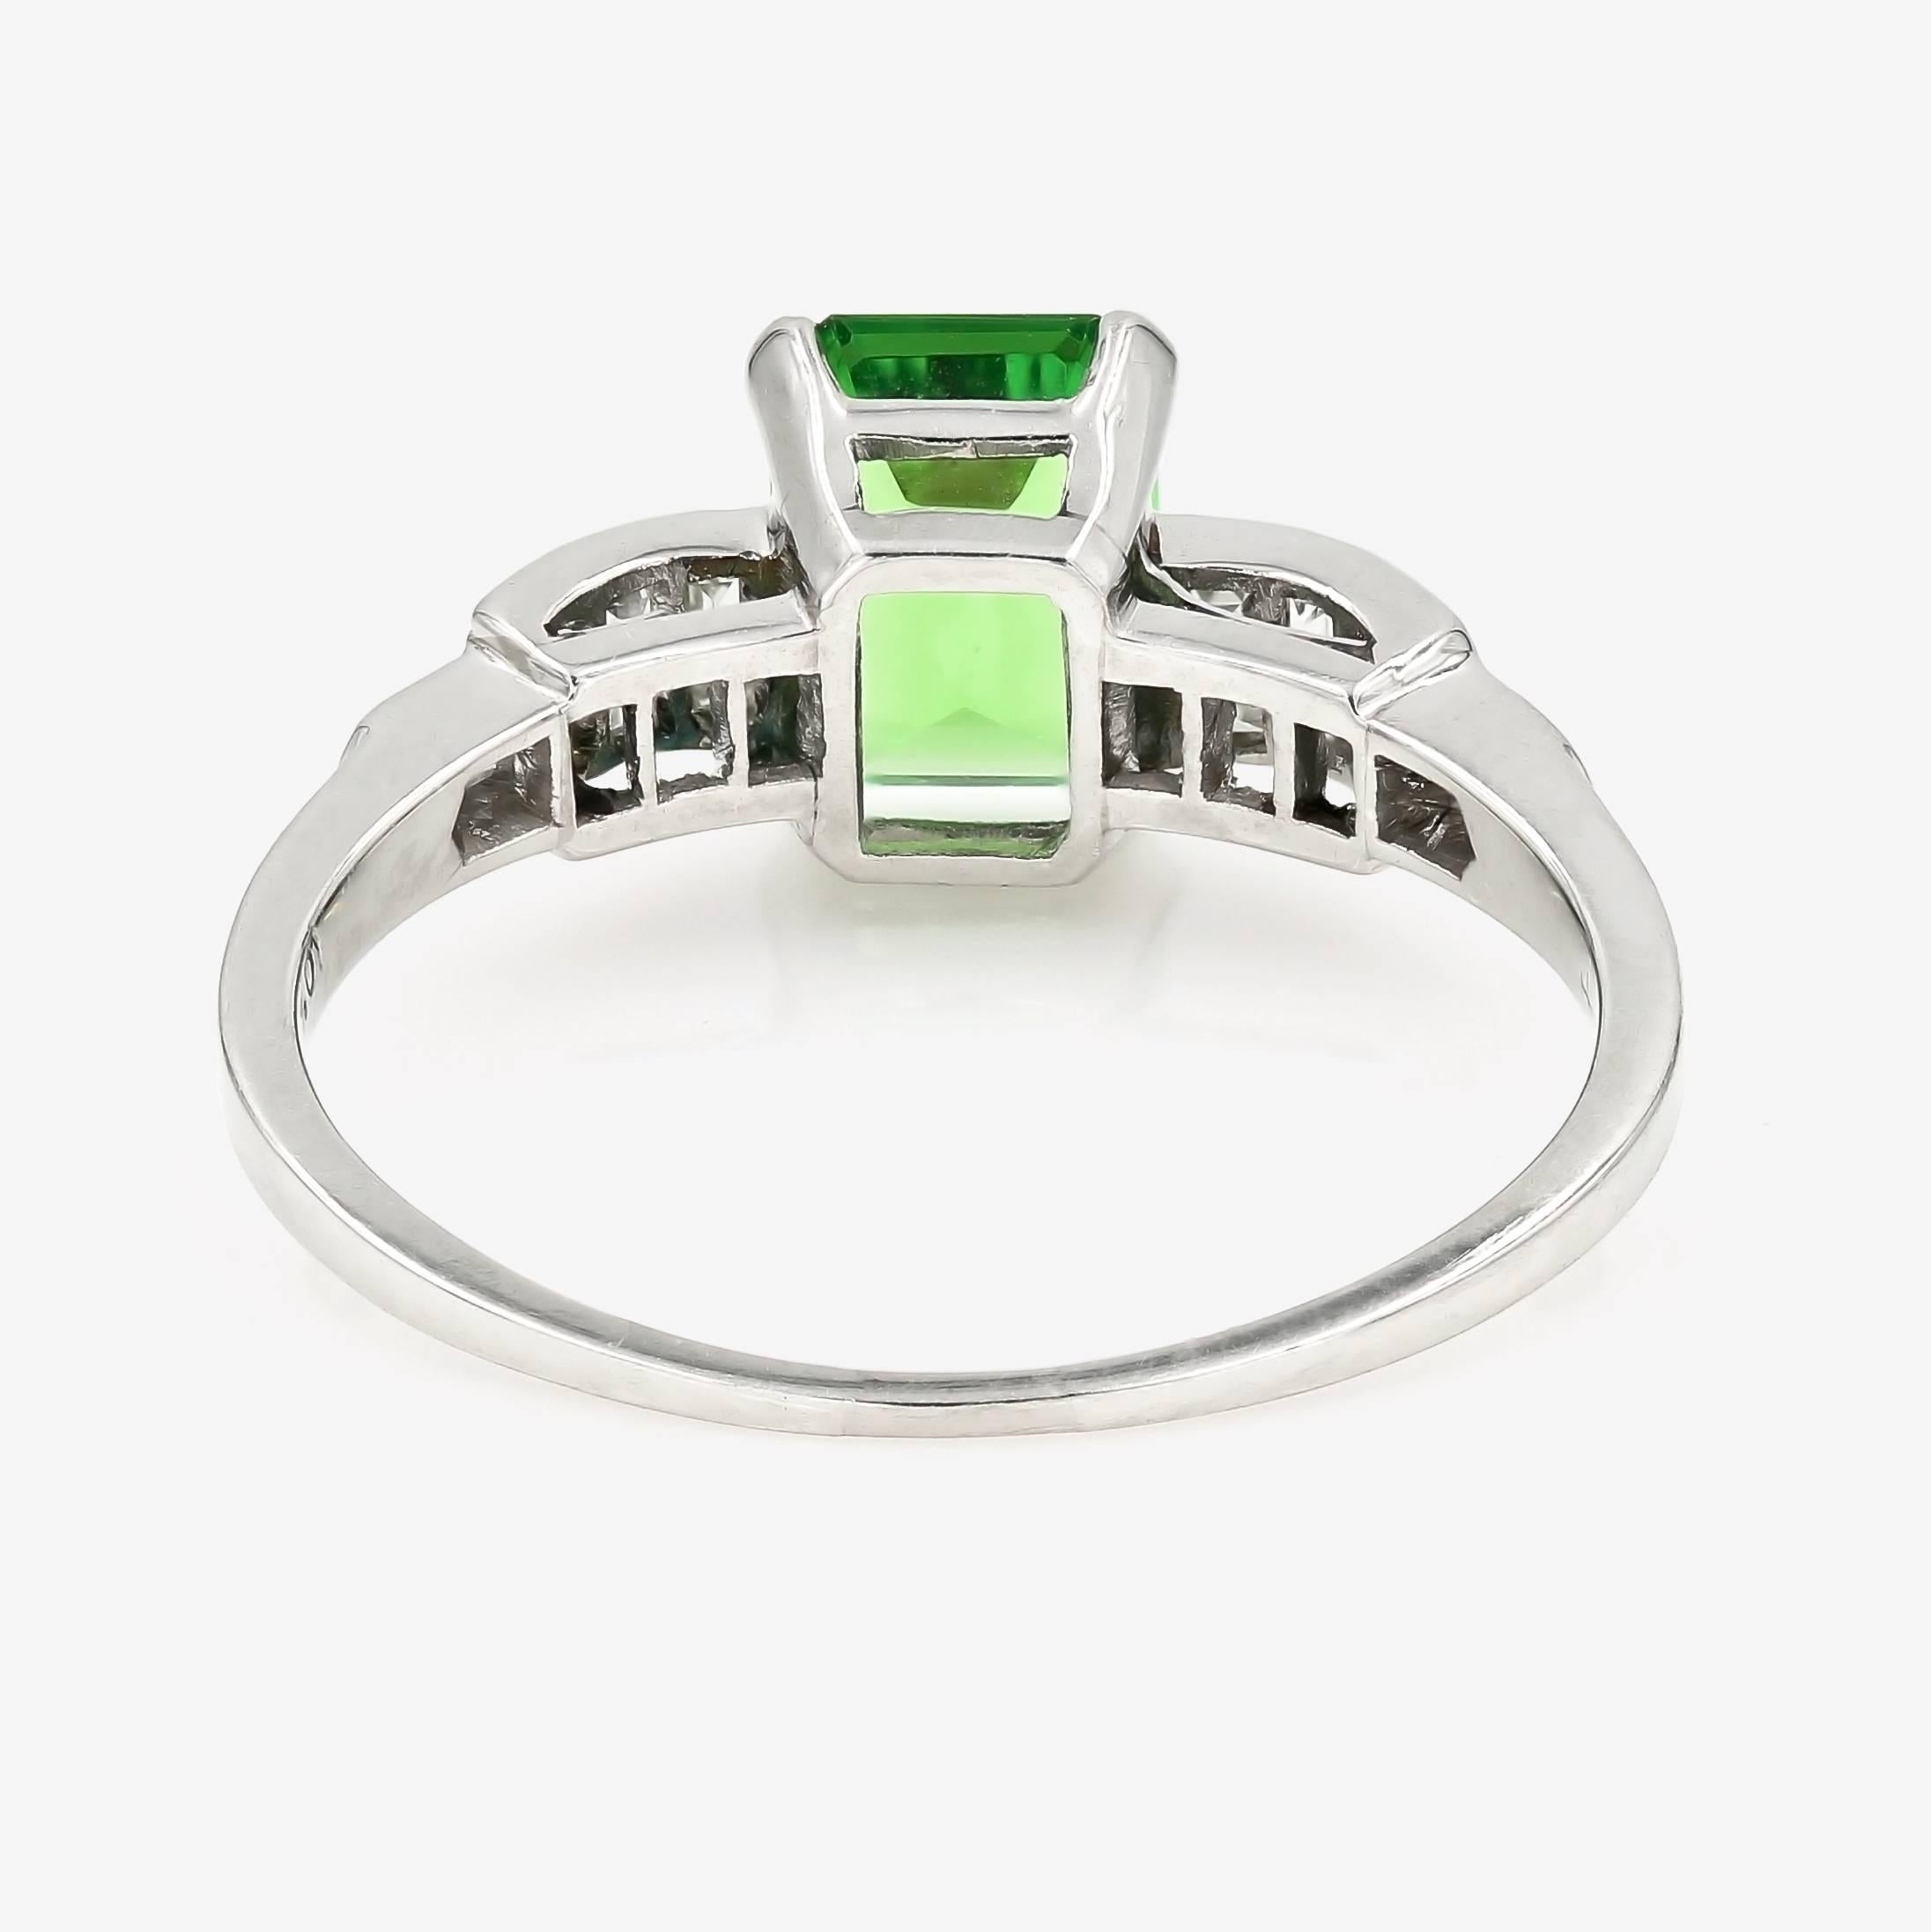 Women's Emerald Cut Natural Tsavorite and Baguette Diamond Ring in Platinum